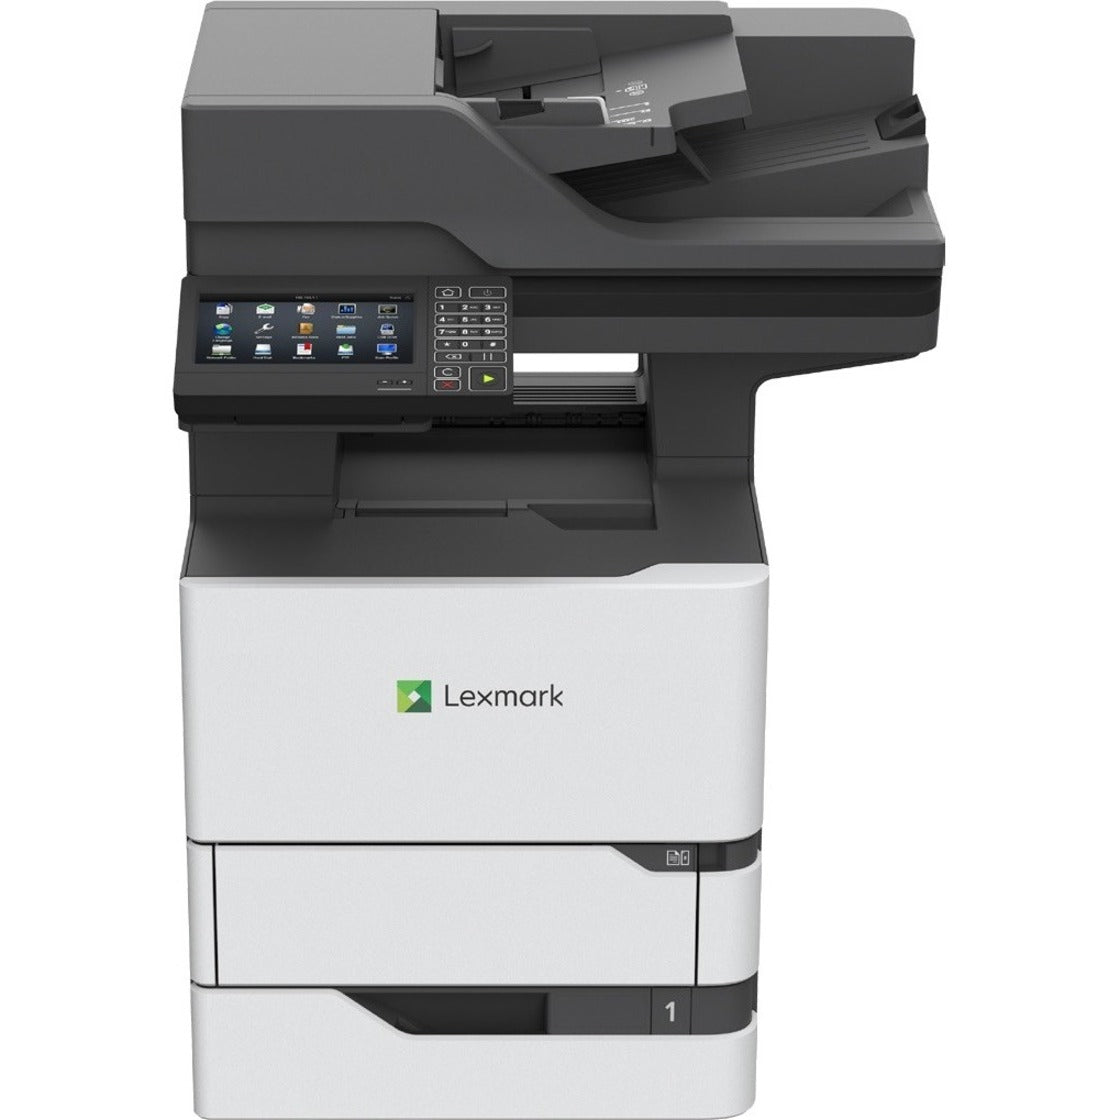 Lexmark 25B0003 MX721adhe Multifunction Laser Printer, High-Speed Monochrome Printing